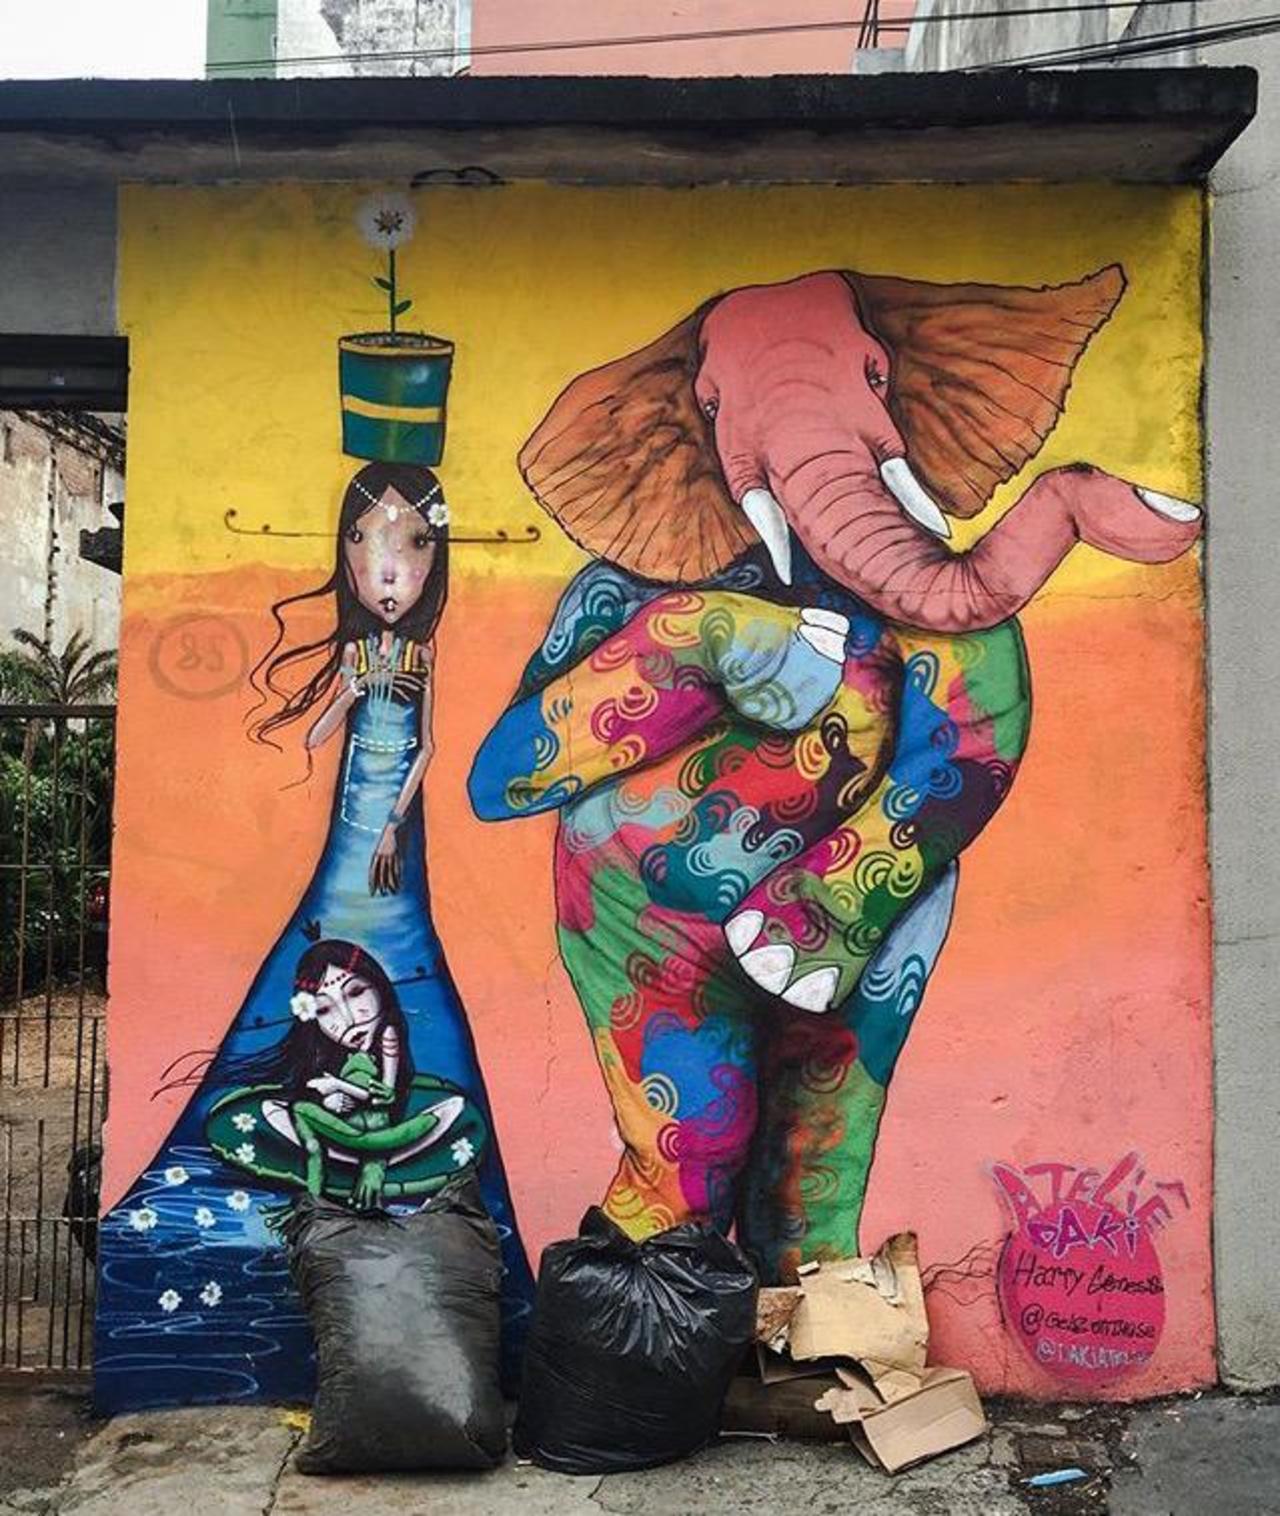 Street Art by Harry Geneis & Gelson in São Paulo 

#art #mural #graffiti #streetart http://t.co/Lfb3DQwGw7